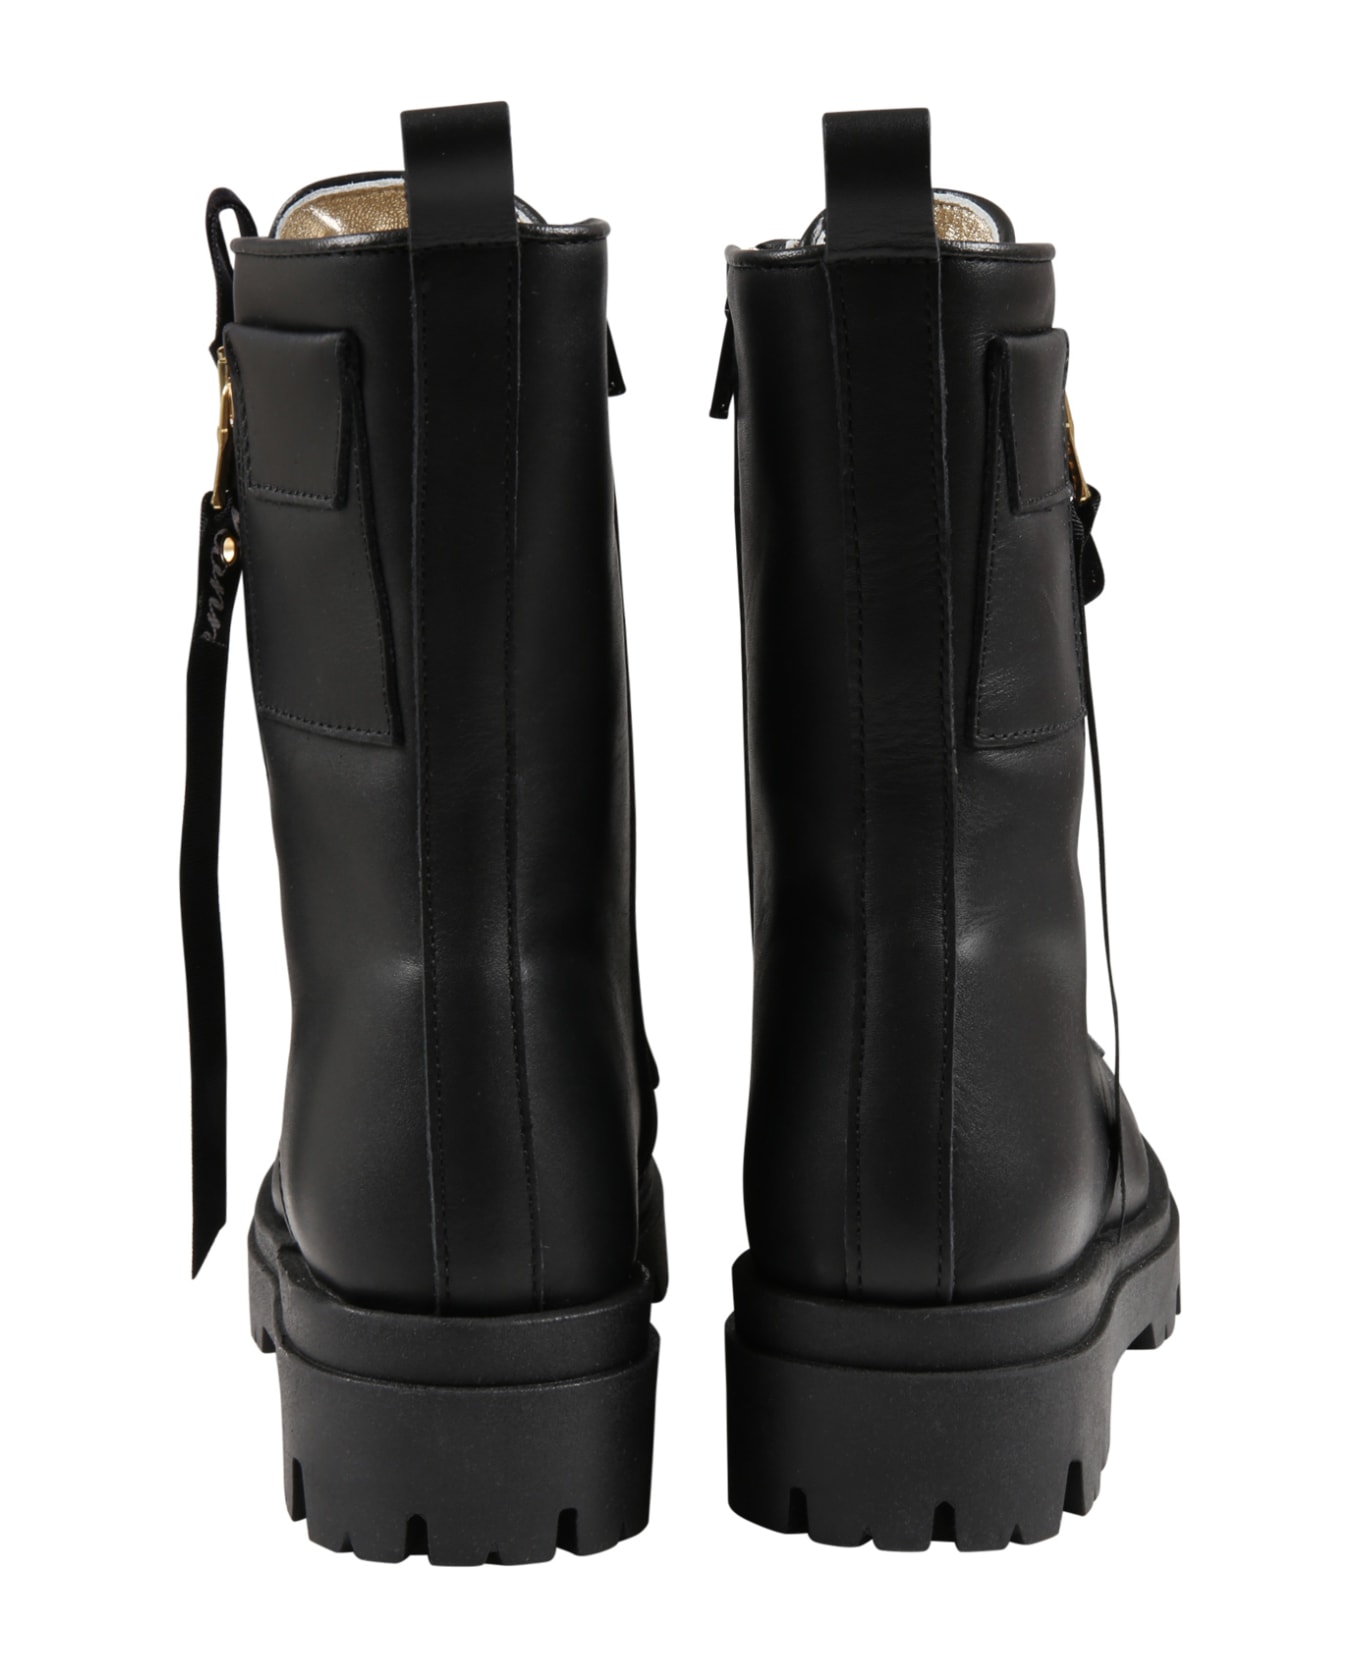 Monnalisa Black Boots For Girl - Black